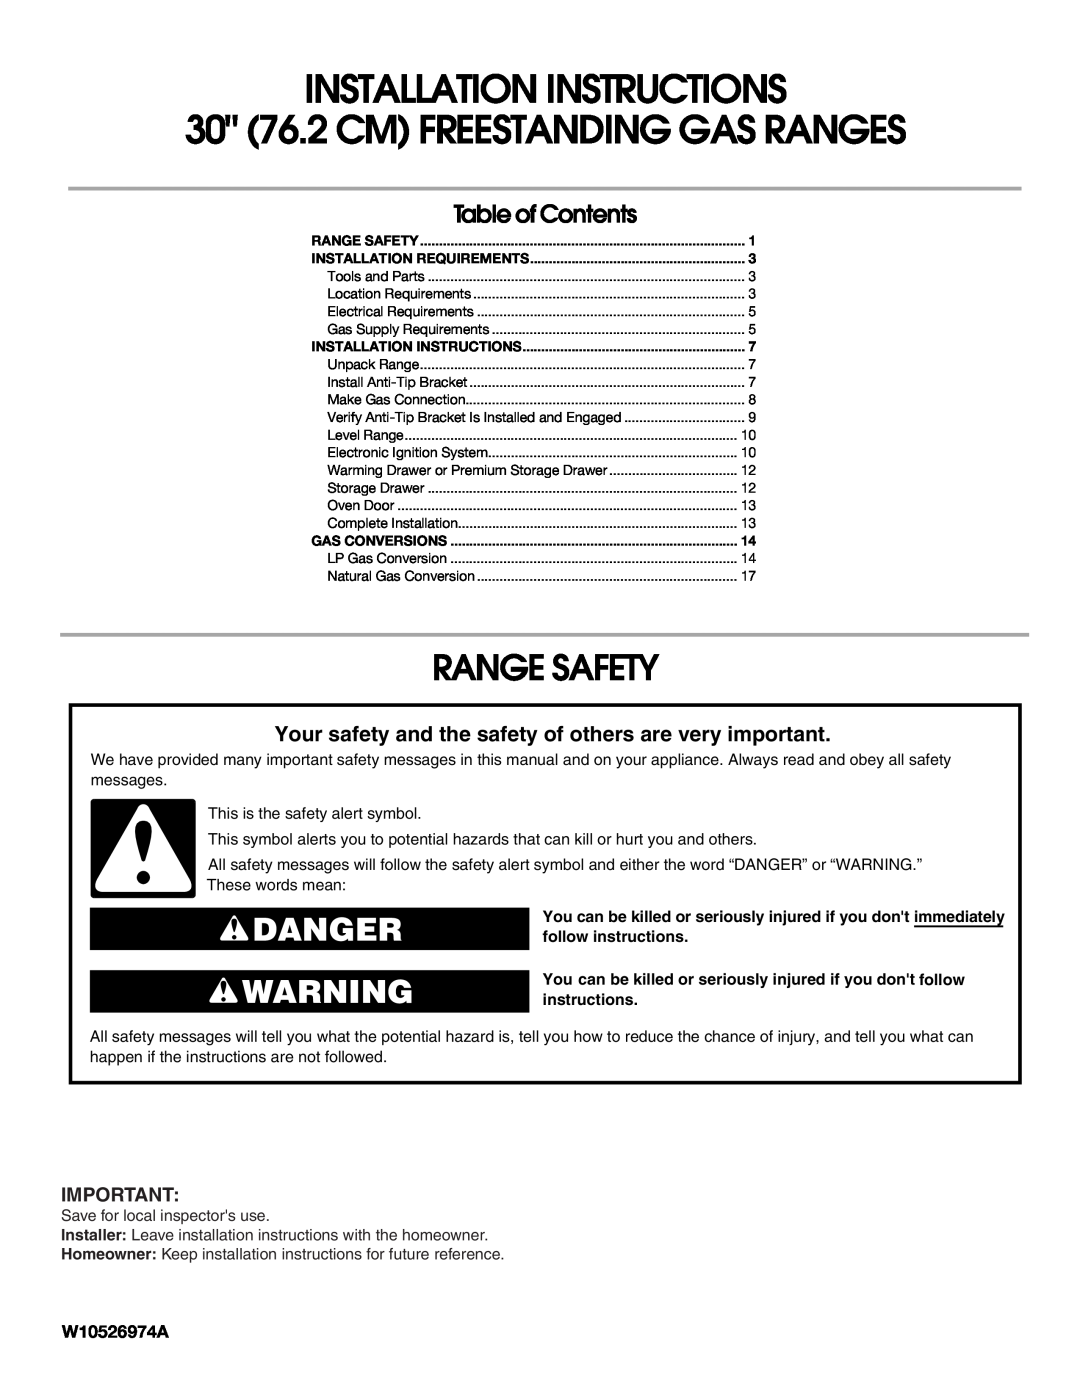 Whirlpool W10526974A installation instructions Range Safety, INSTALLATION INSTRUCTIONS 30 76.2 CM FREESTANDING GAS RANGES 